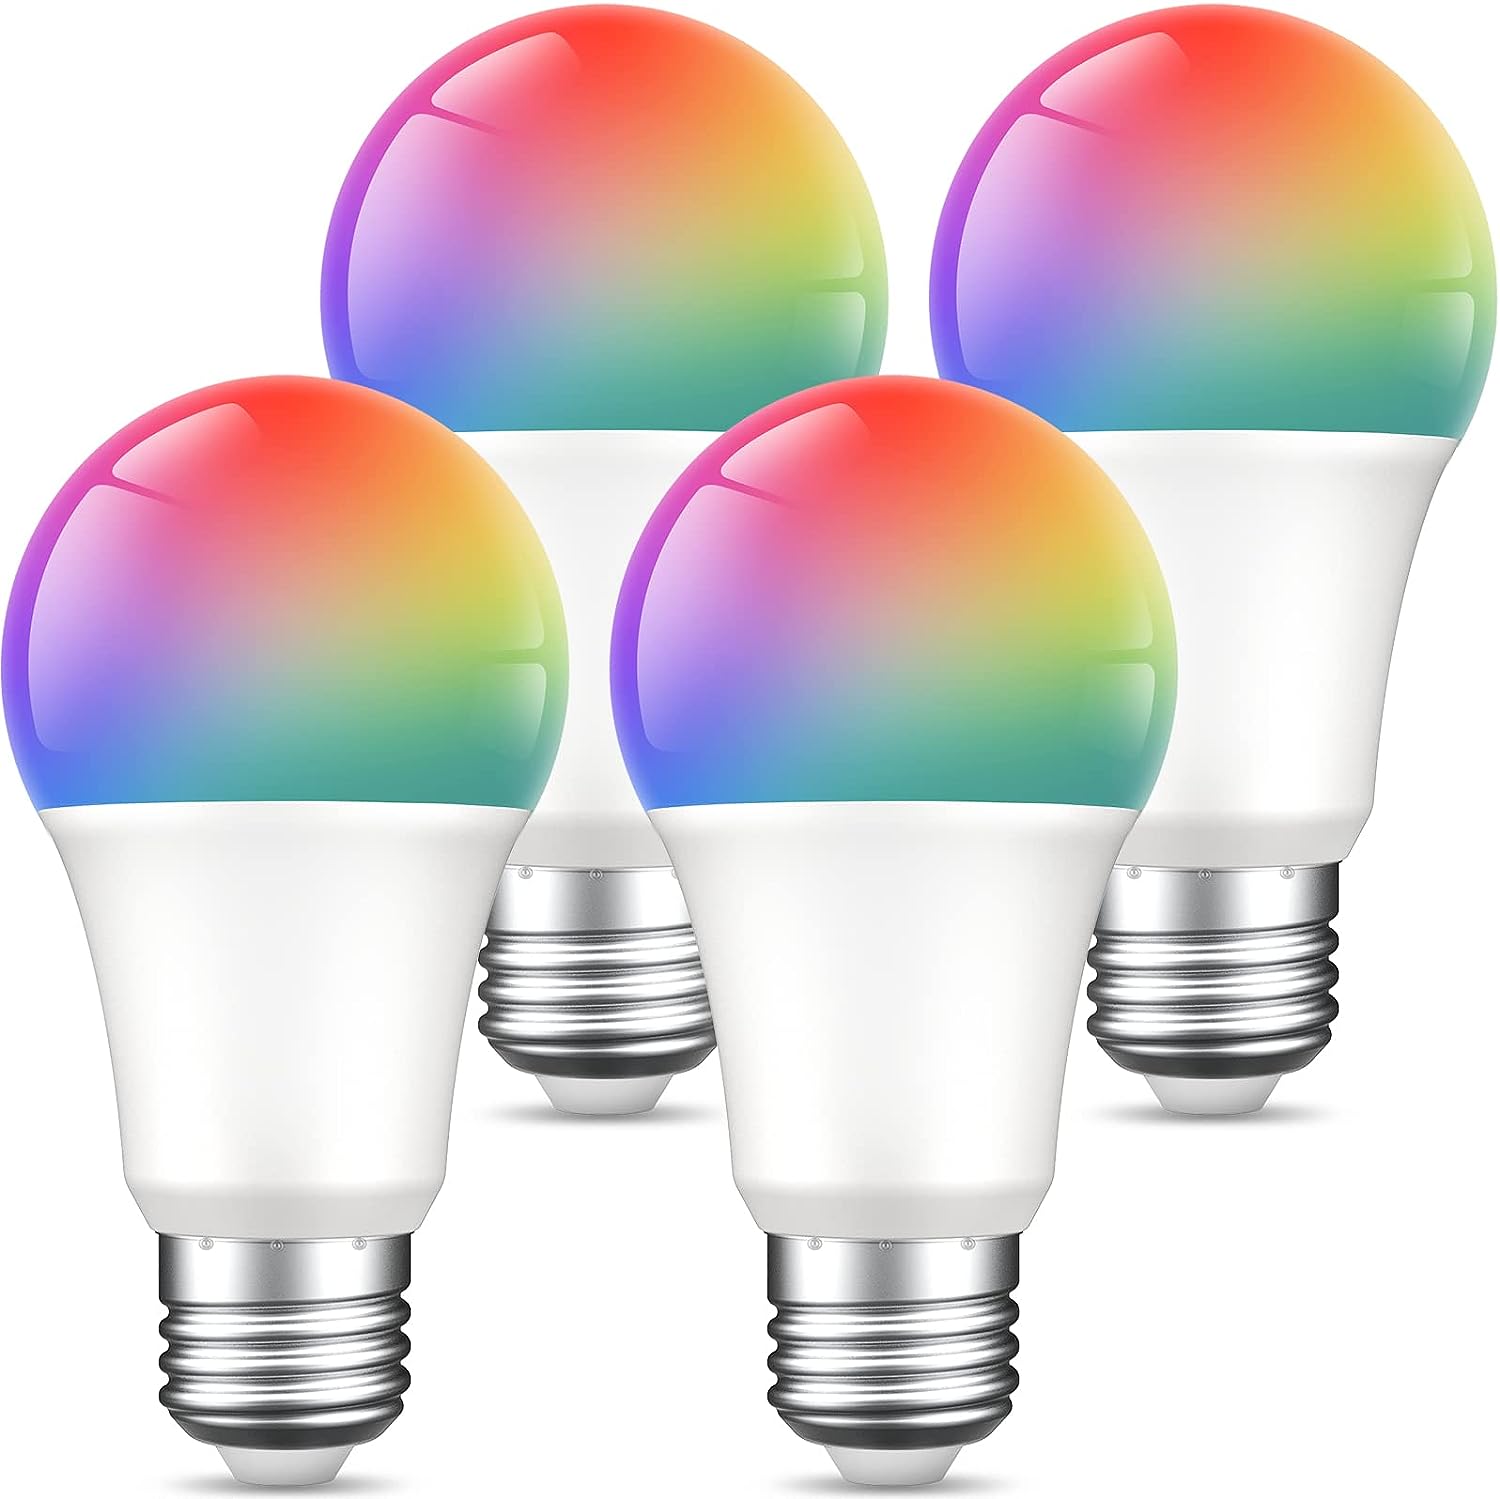 Ghome Smart Light Bulbs: The Ultimate Home Lighting Solution